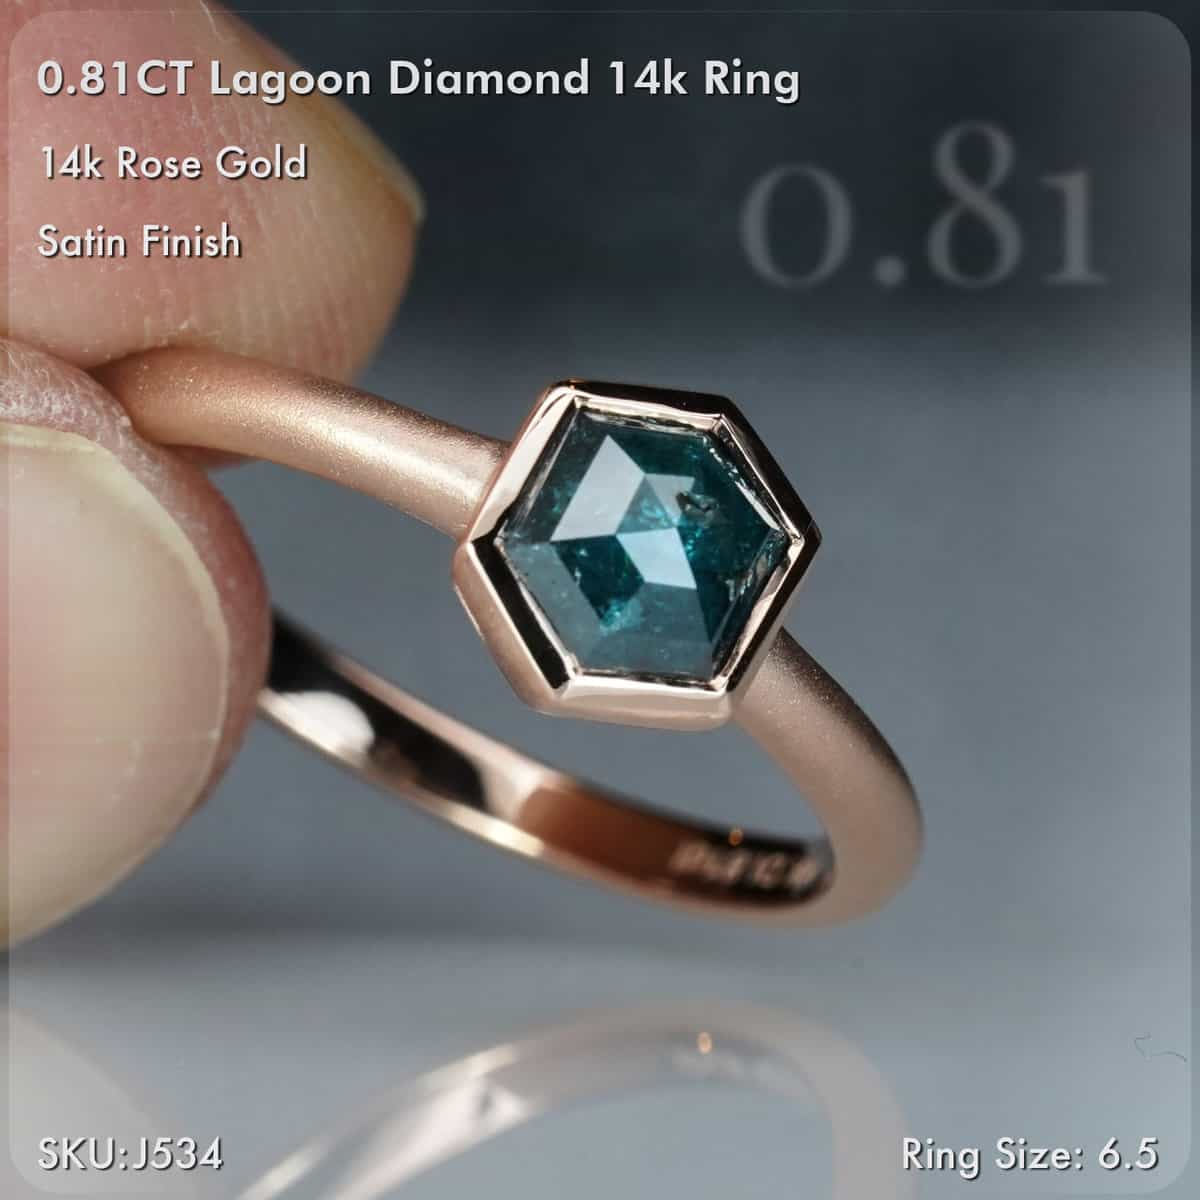 0.81CT Tidepool Diamond Ring